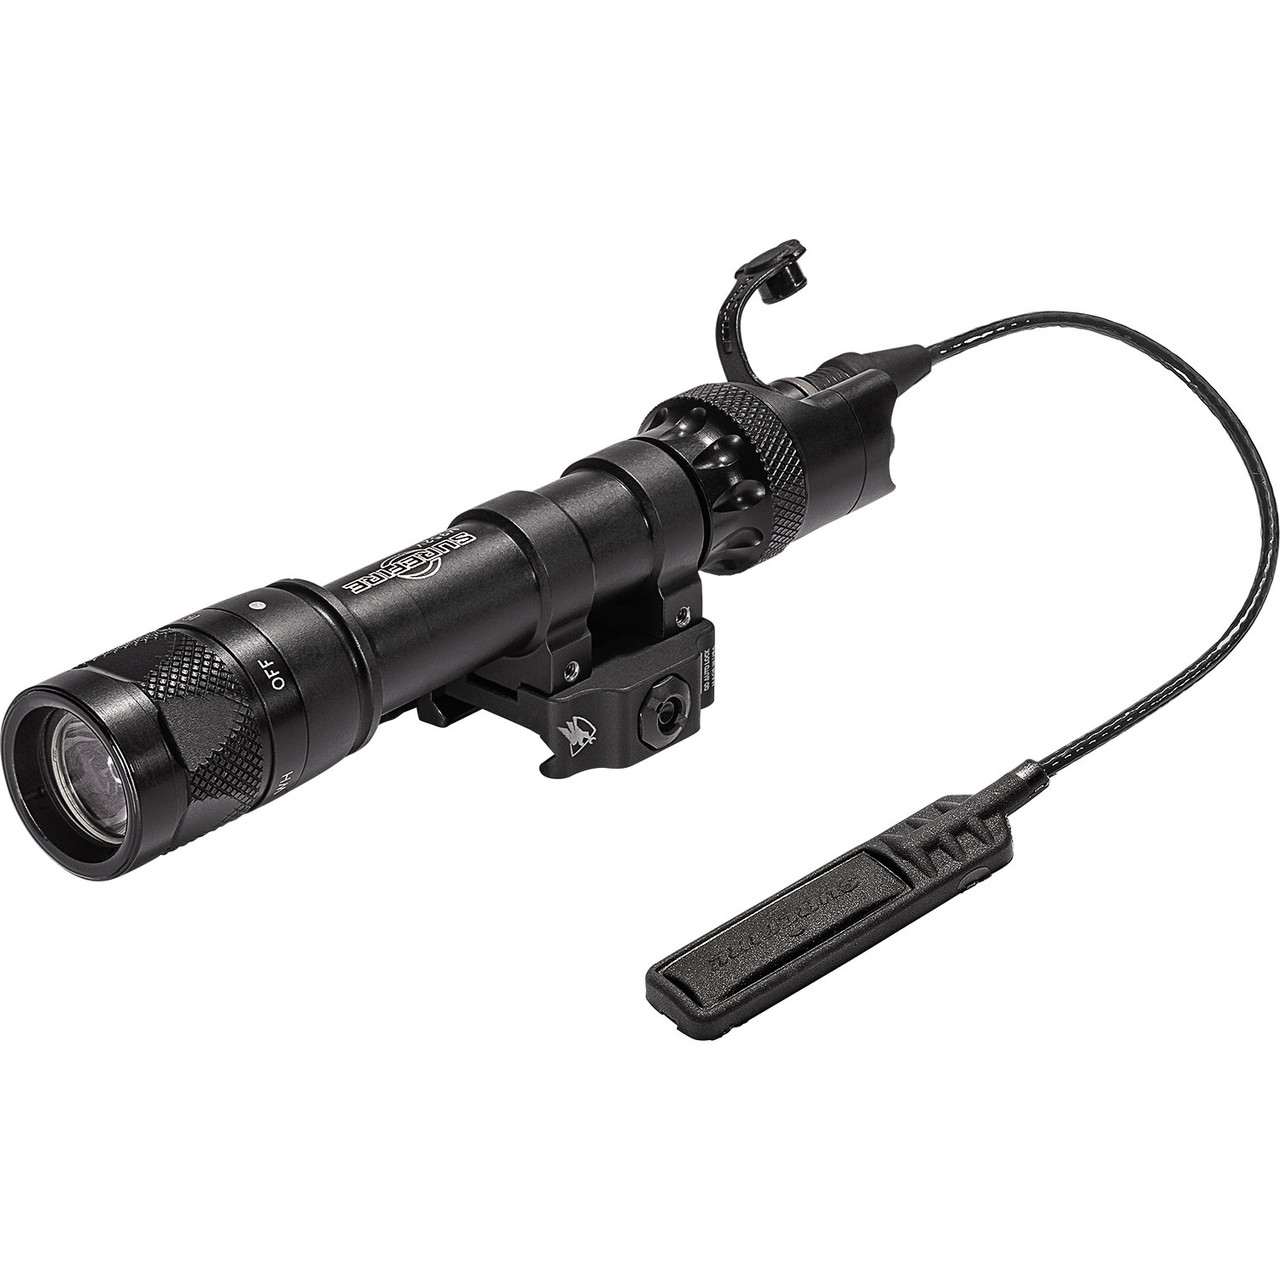  ZTFSETD Tactical IR Light M952V Scout Flashlight 500 Lumens LED  White Light & Infrared Illuminator,Flashing Metal Quick Release LED Light  (Black) : Sports & Outdoors